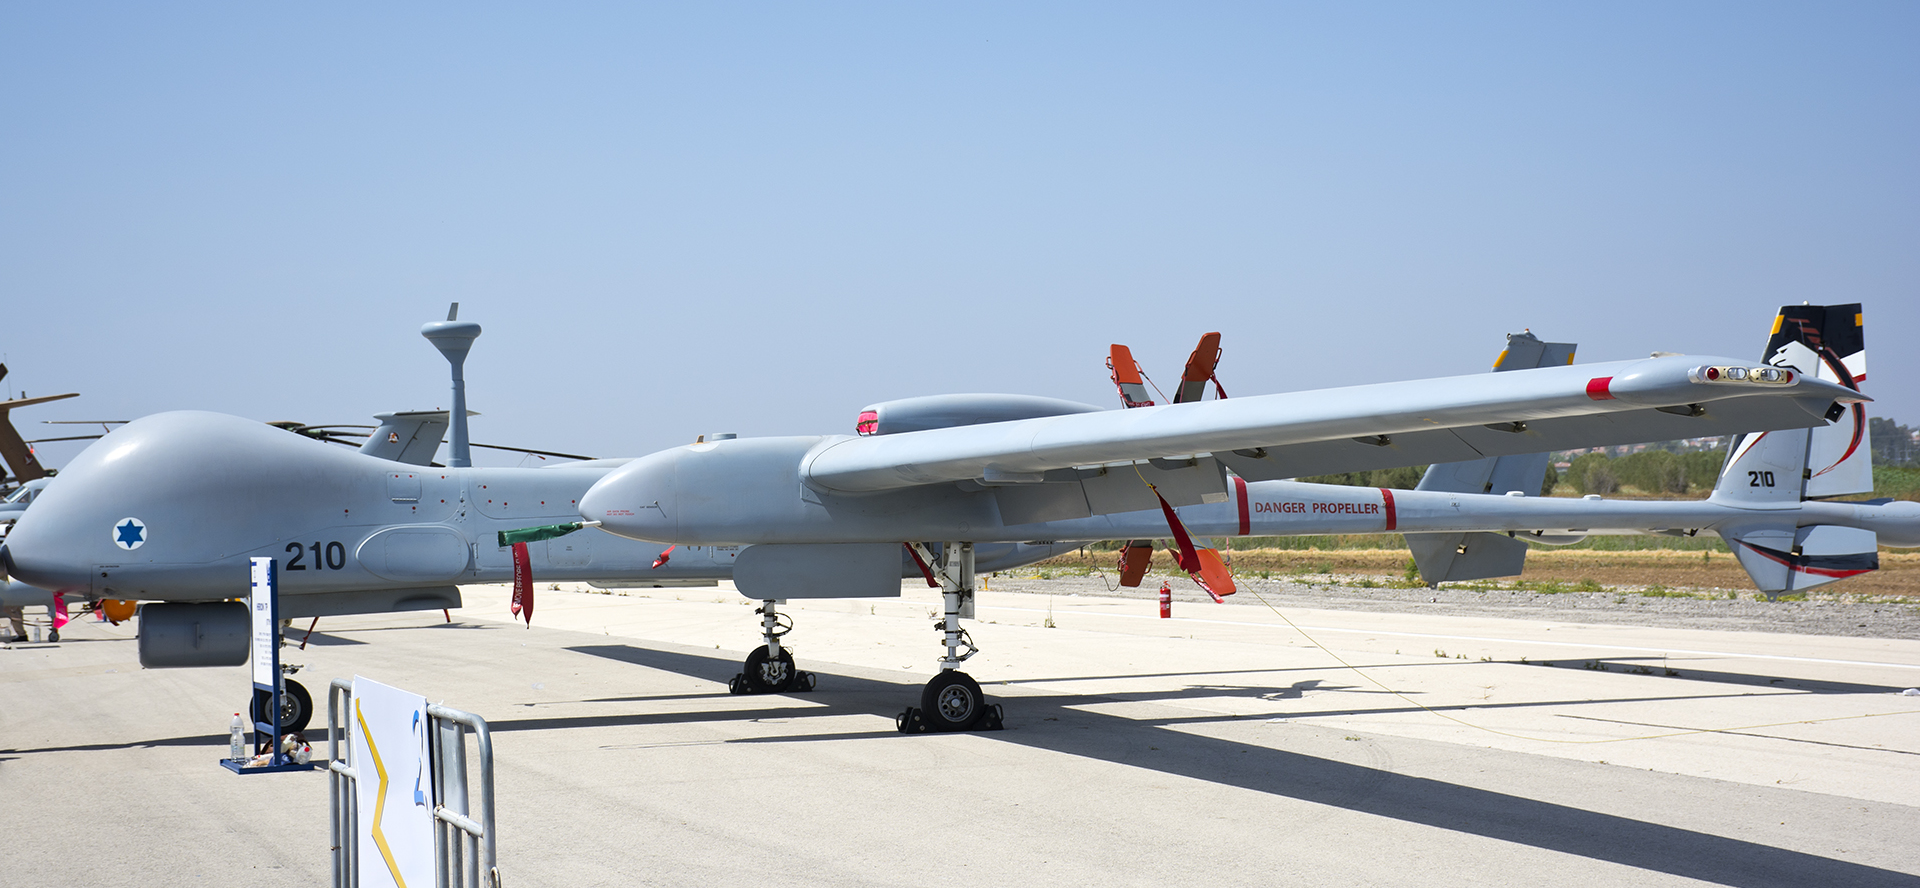 IAI Eitan, Israel's heaviest assault reconnaissance-UAV